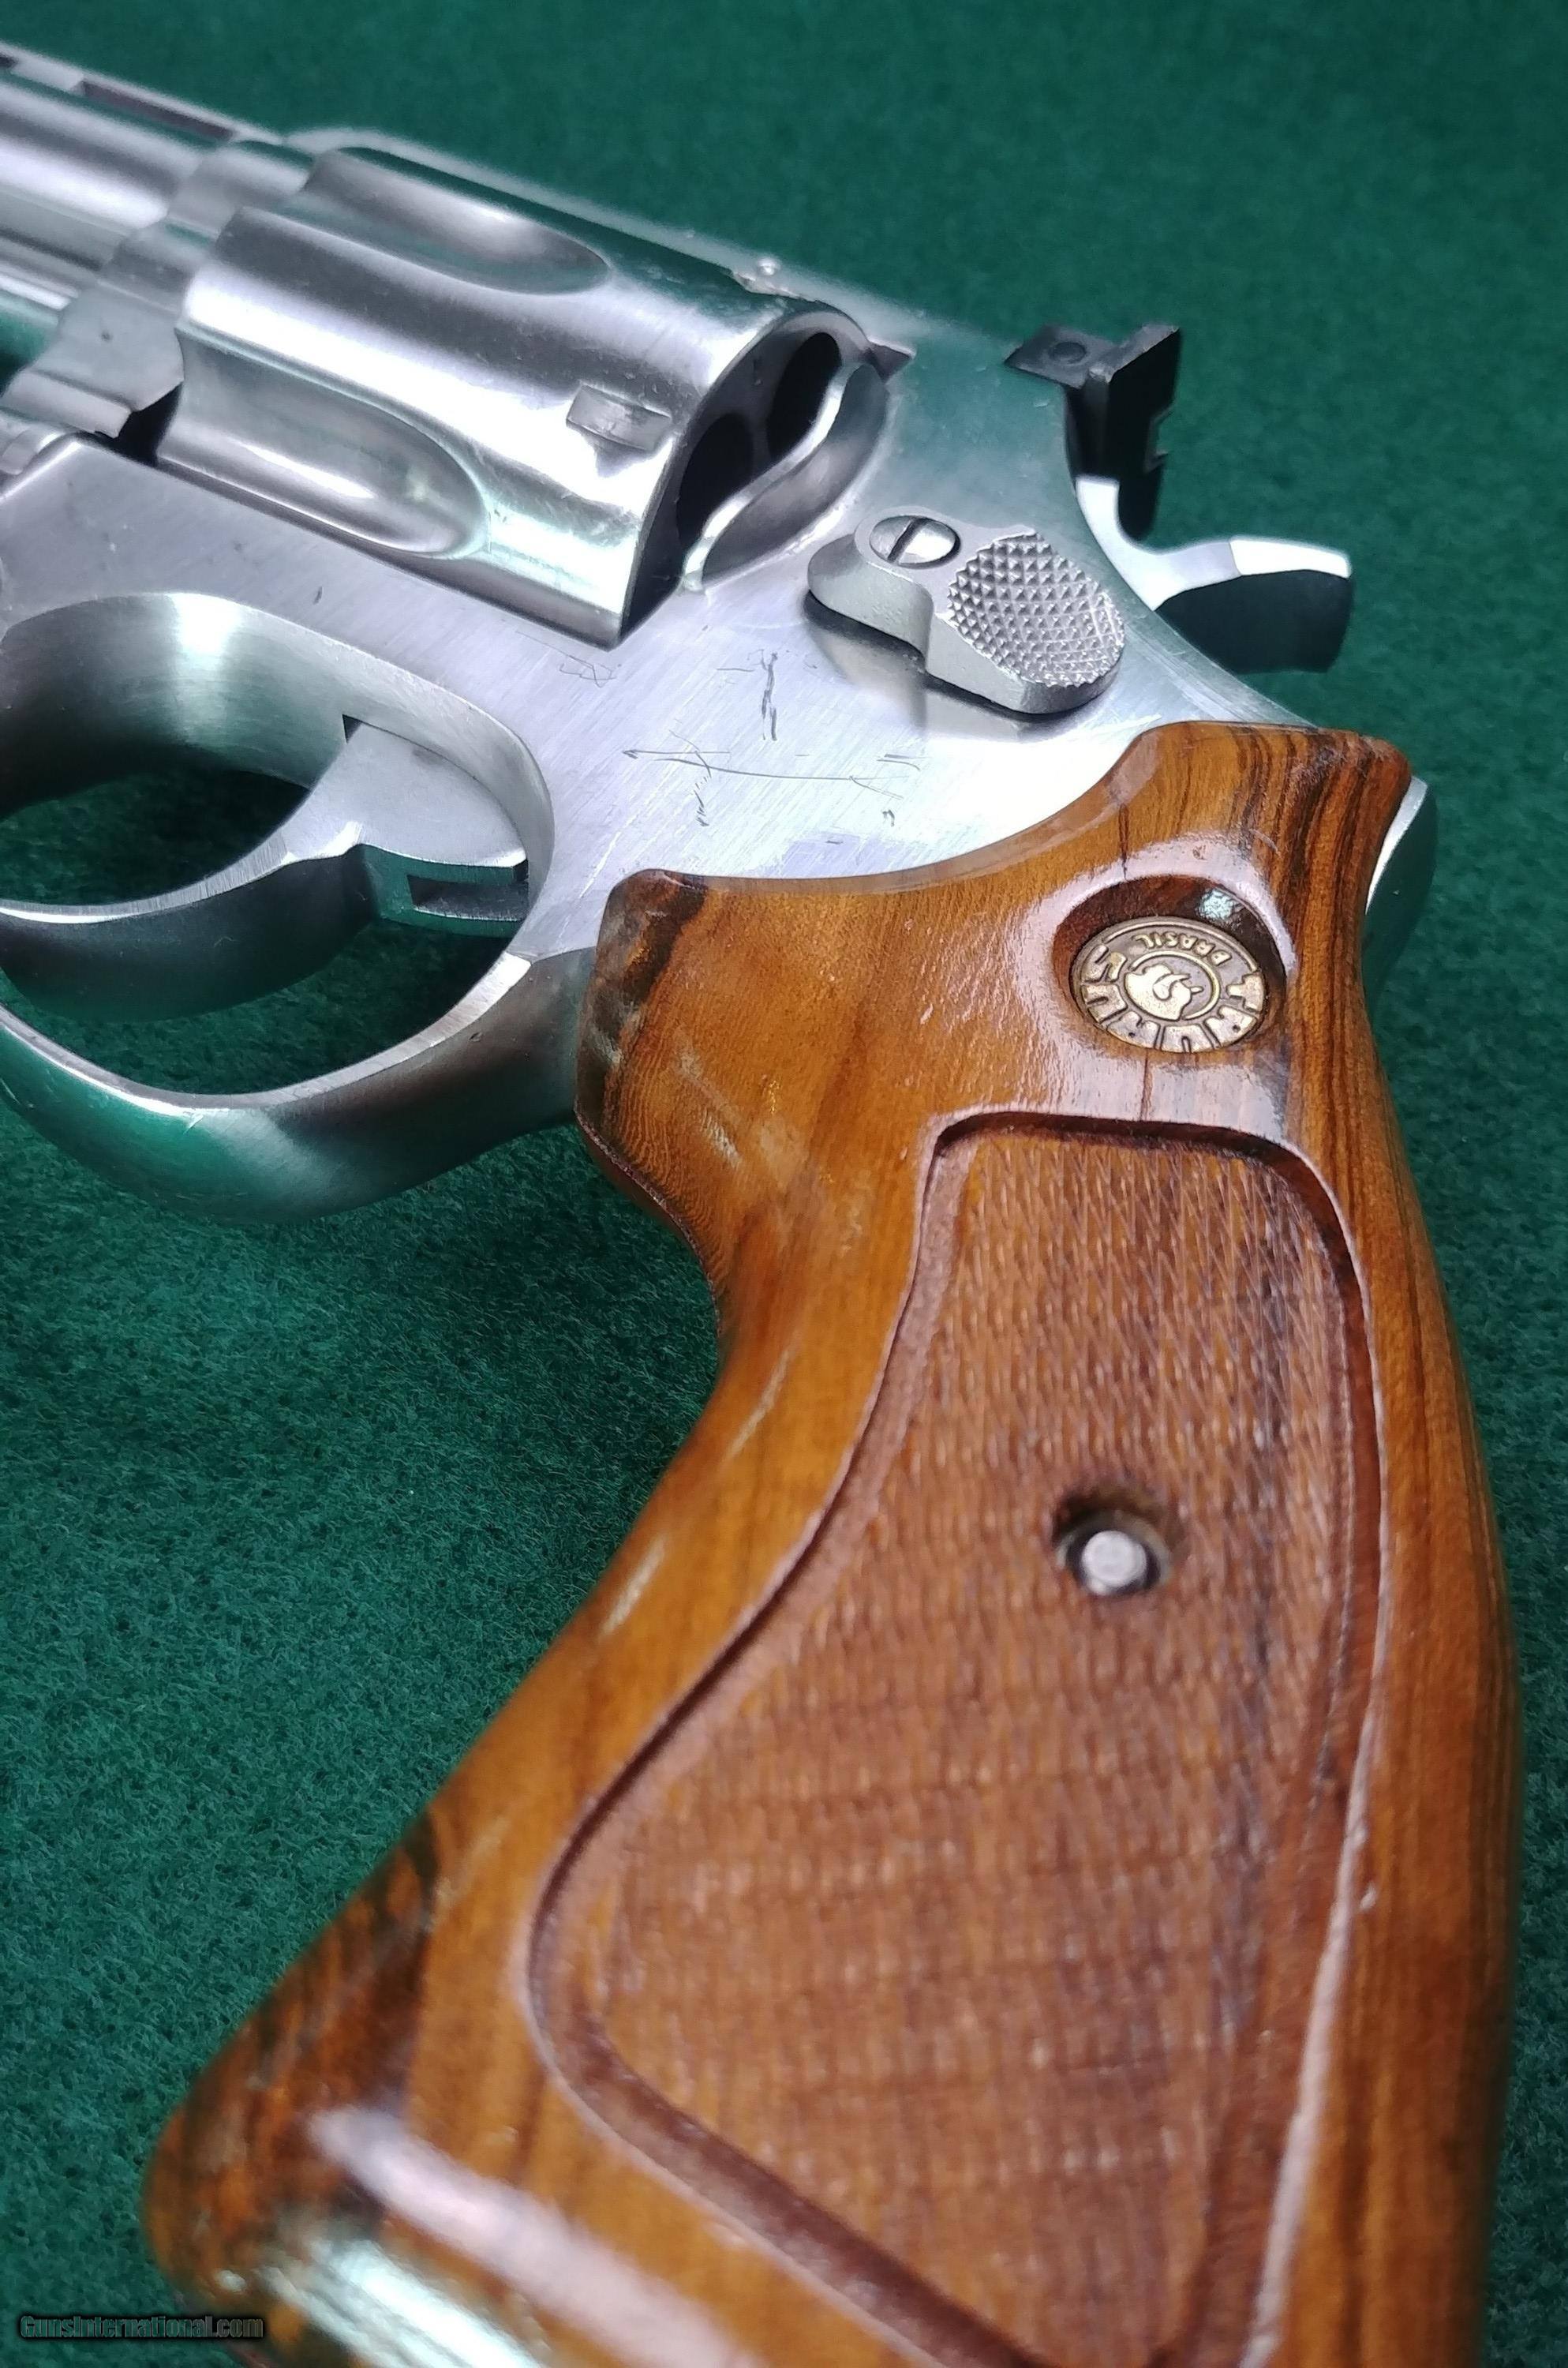 Revolver test: Taurus 689 in .357 Magnum - is it worth its price?